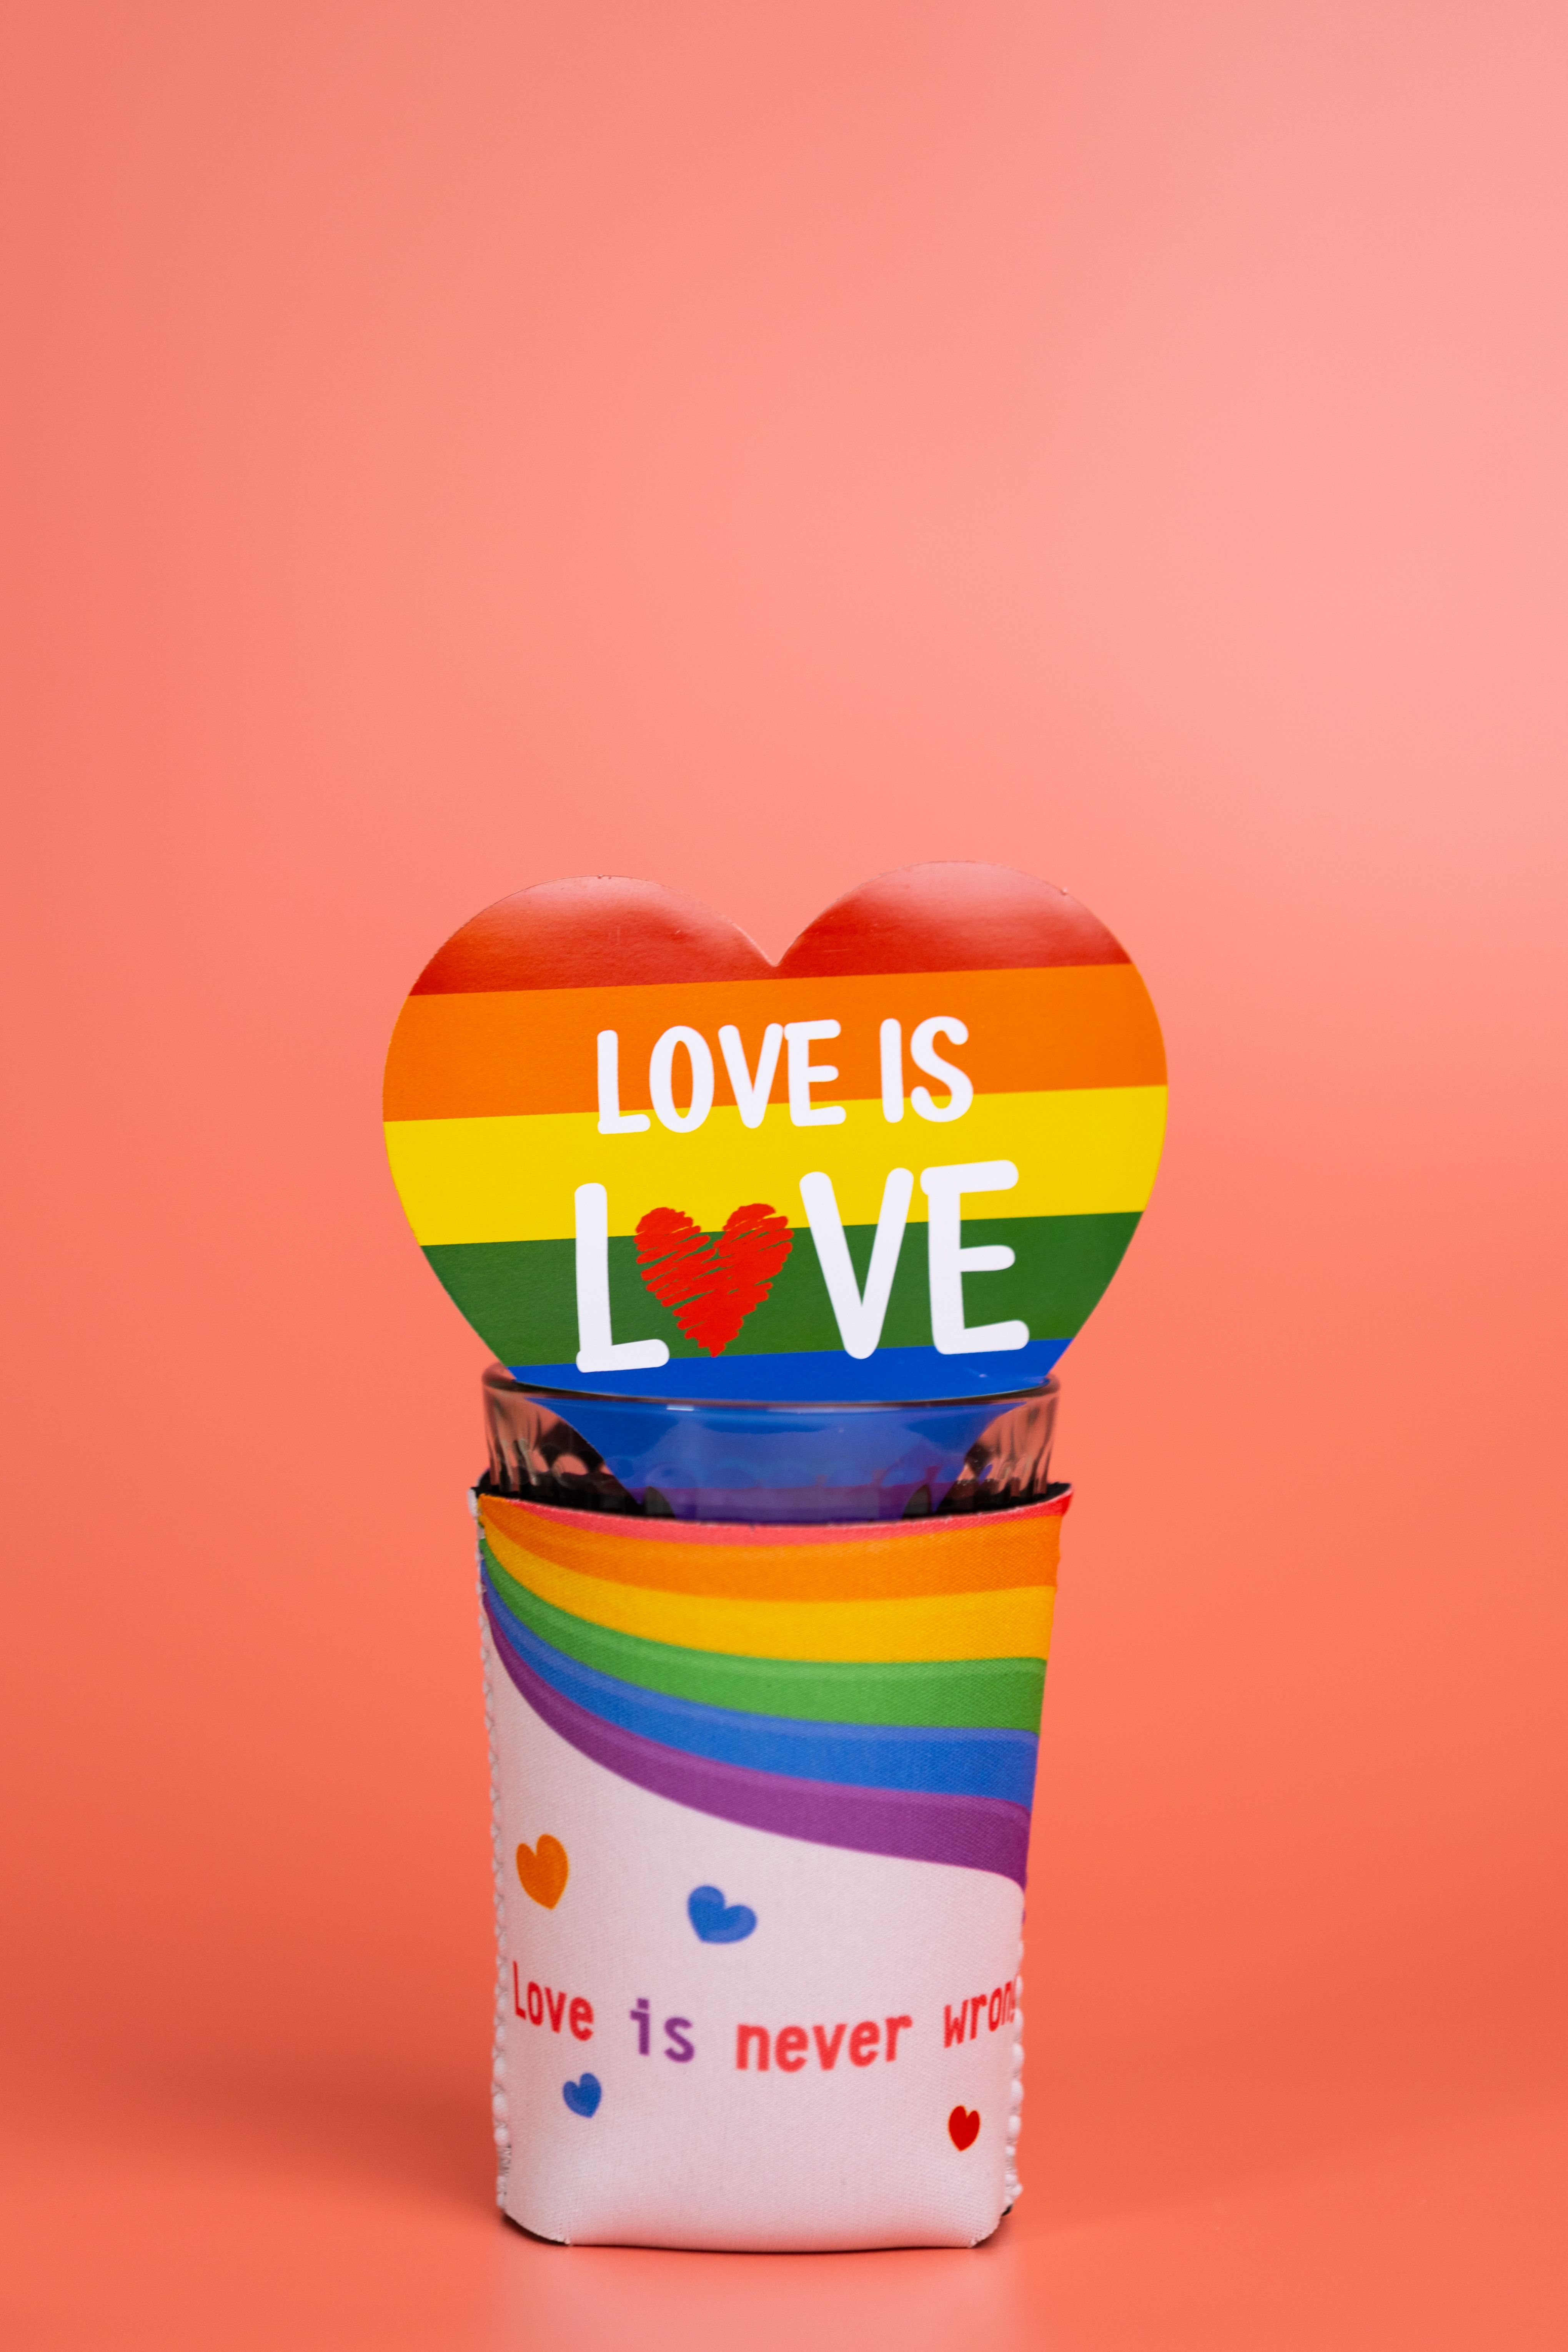 Still Life with LGBT Symbol and Slogan · Free